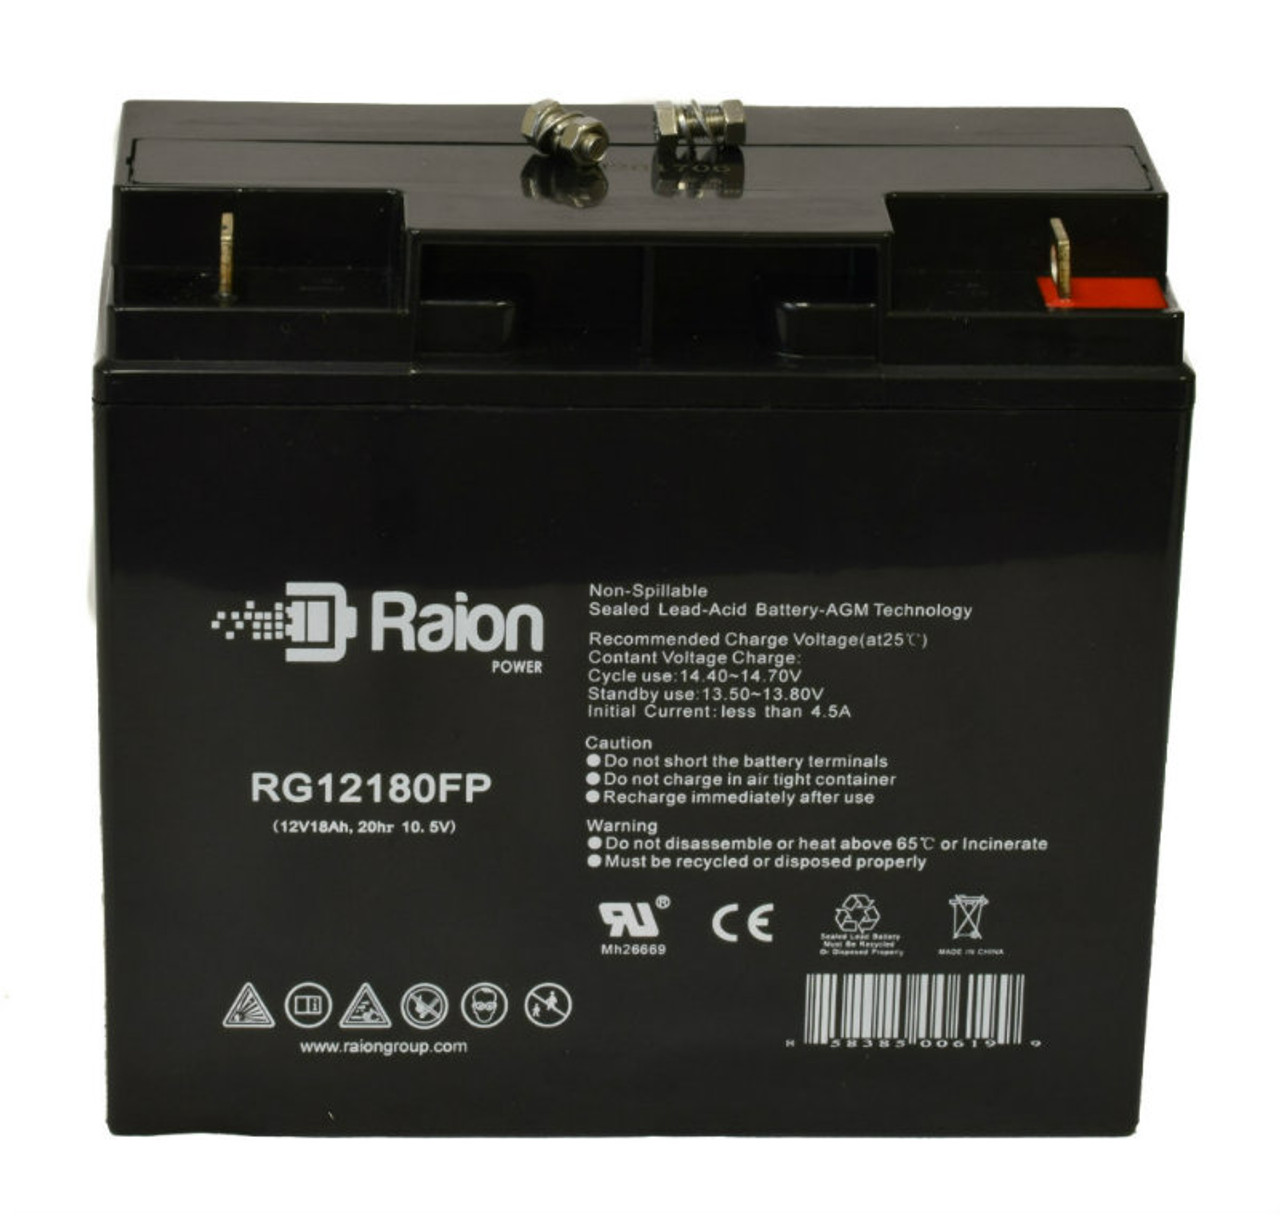 Raion Power RG12180FP 12V 18Ah Lead Acid Battery for Vision CP12170H